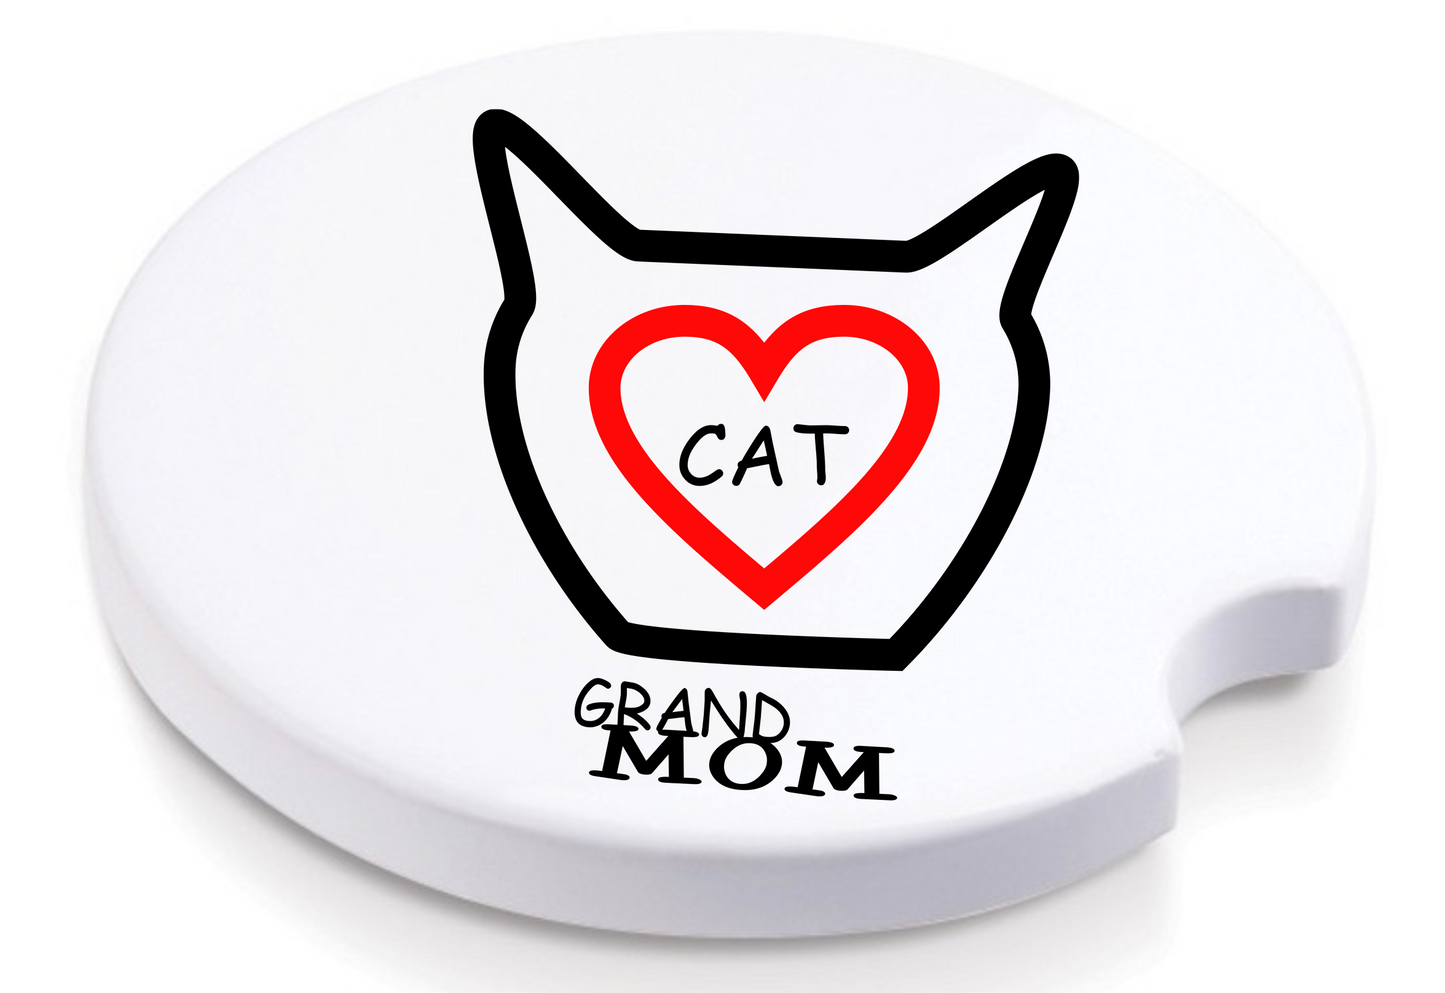 Cat Grand Mom